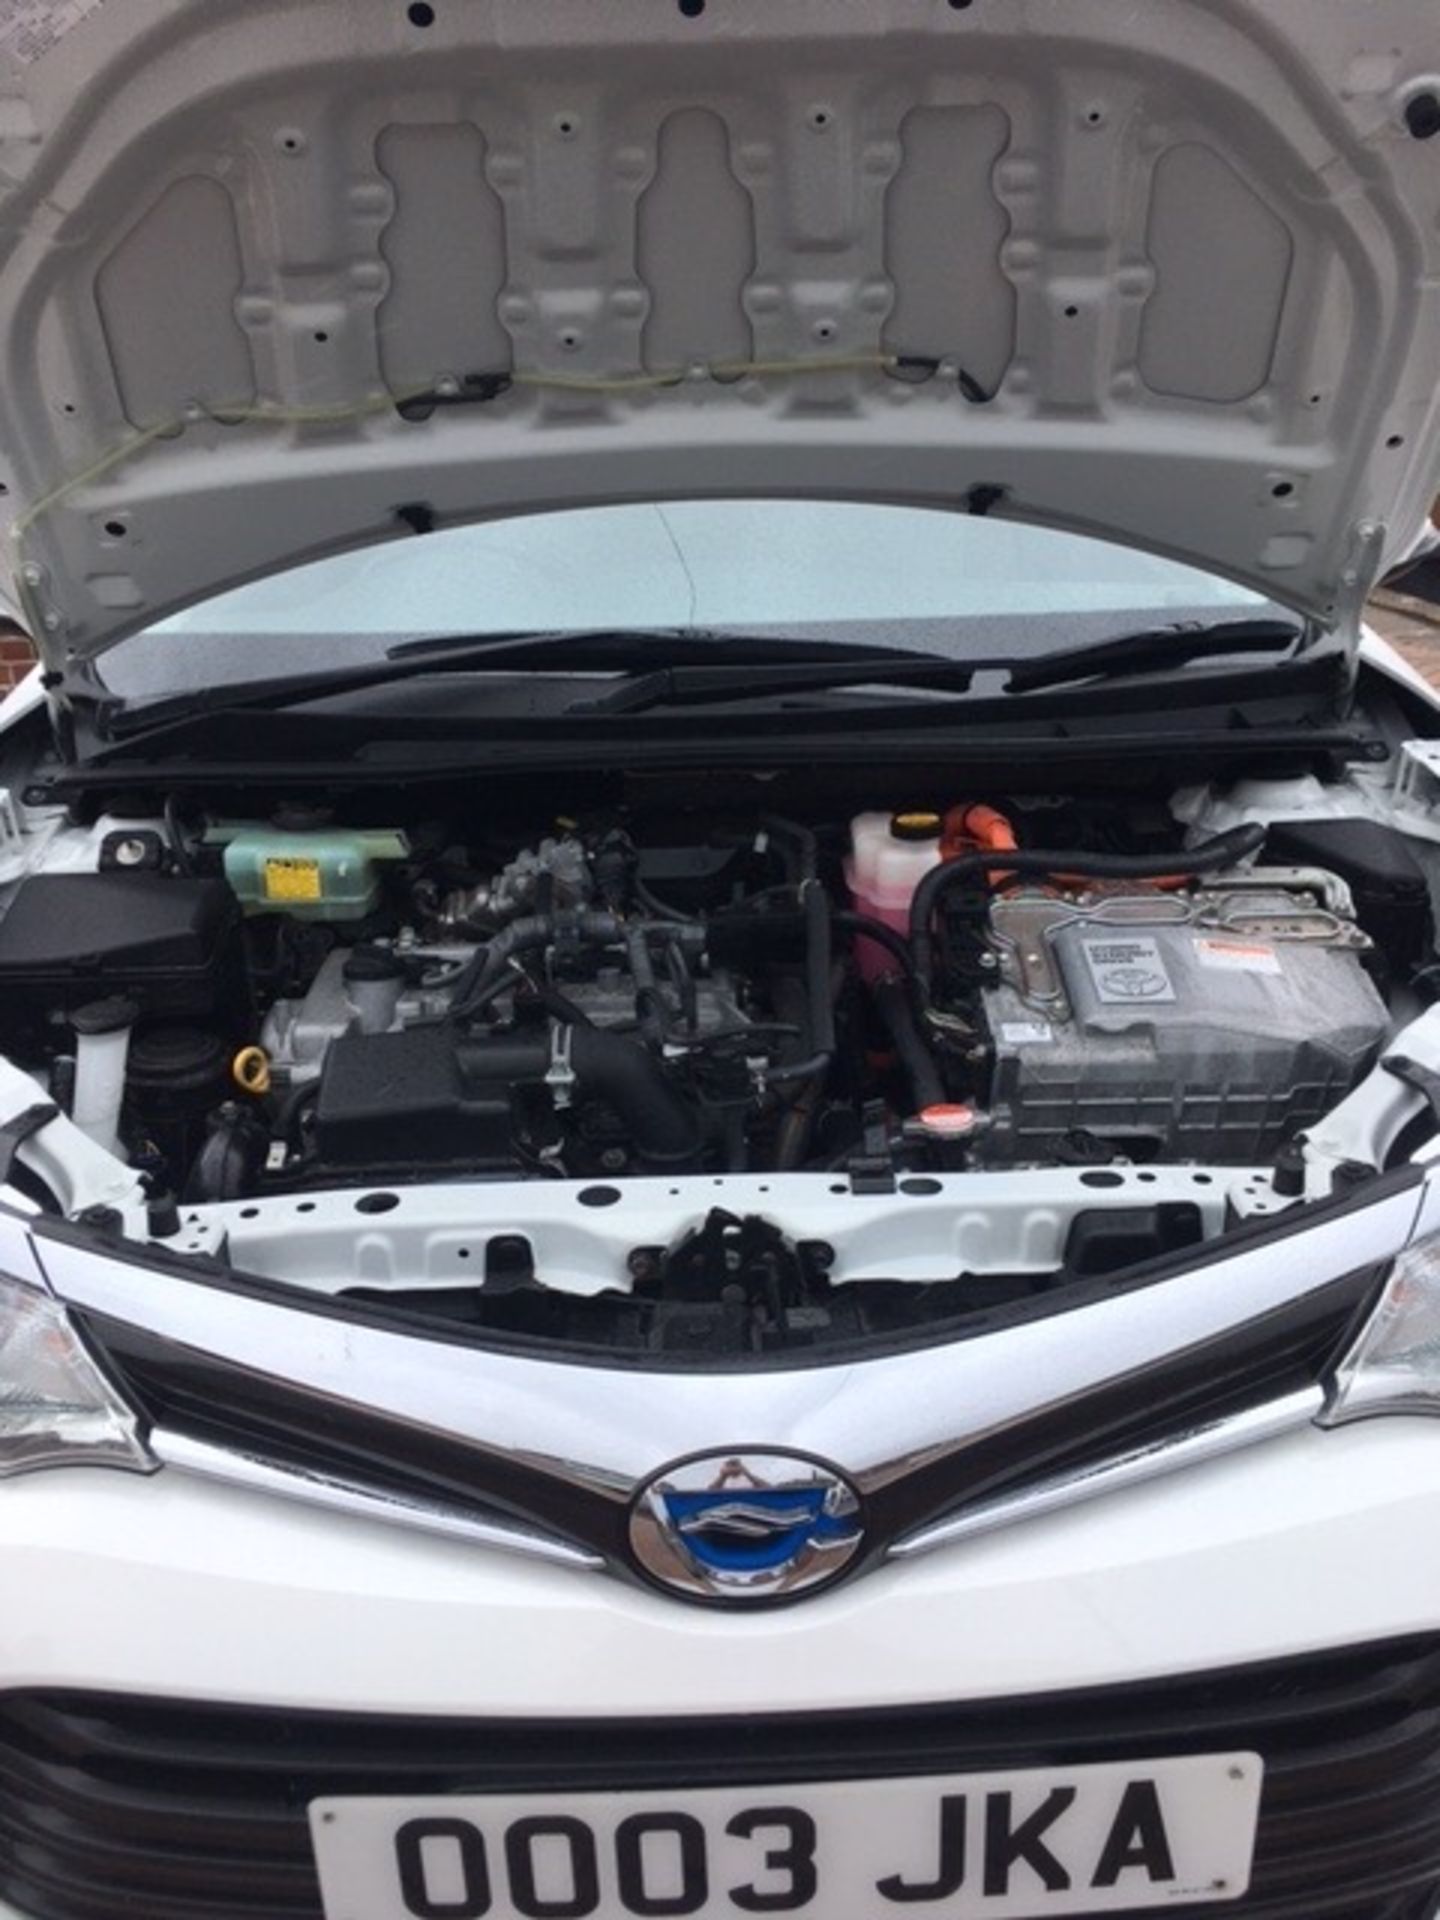 Toyota Corolla 1.5 Petrol / Electric Hybrid Automatic 2016 '66 Reg' - ULEZ Compliant * LOW MILES * - Image 5 of 18